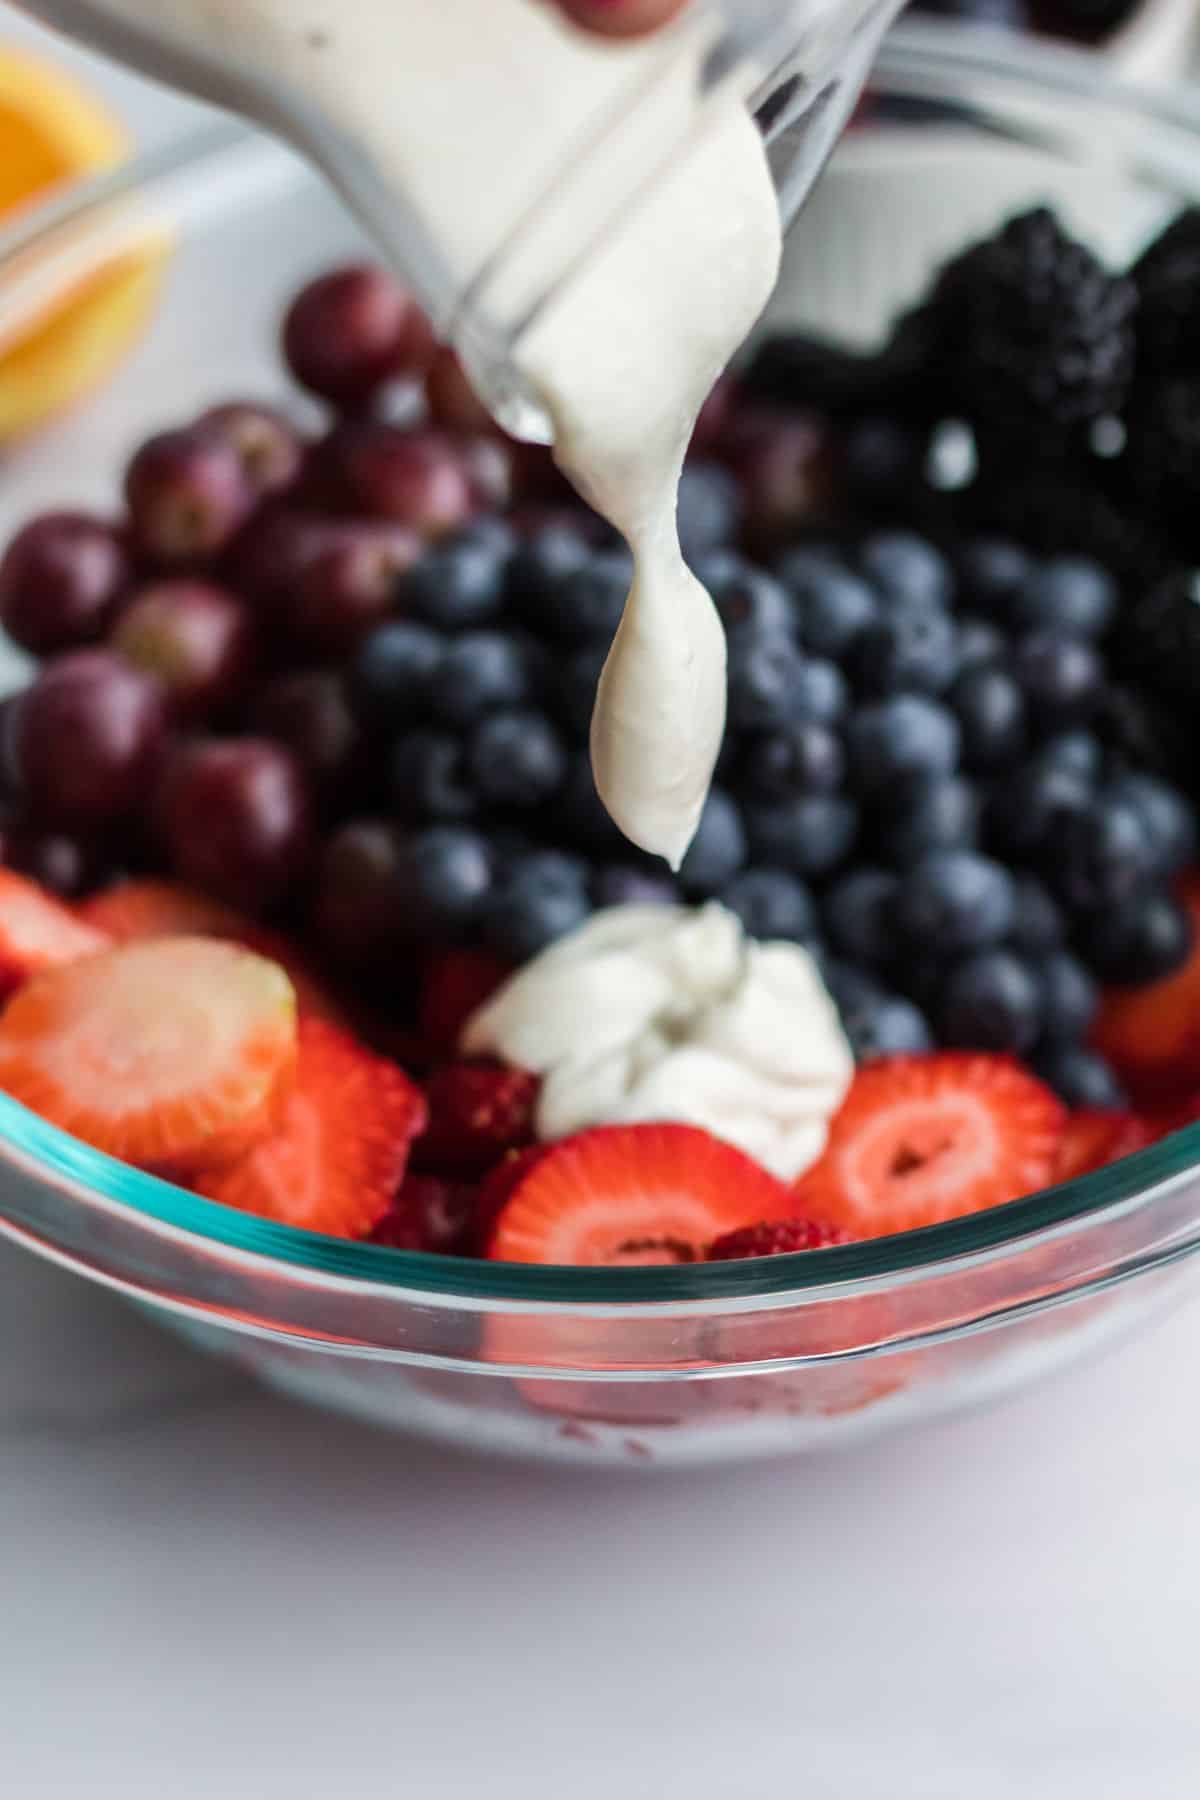 Creamy yogurt dressing being poured over fruit salad. 